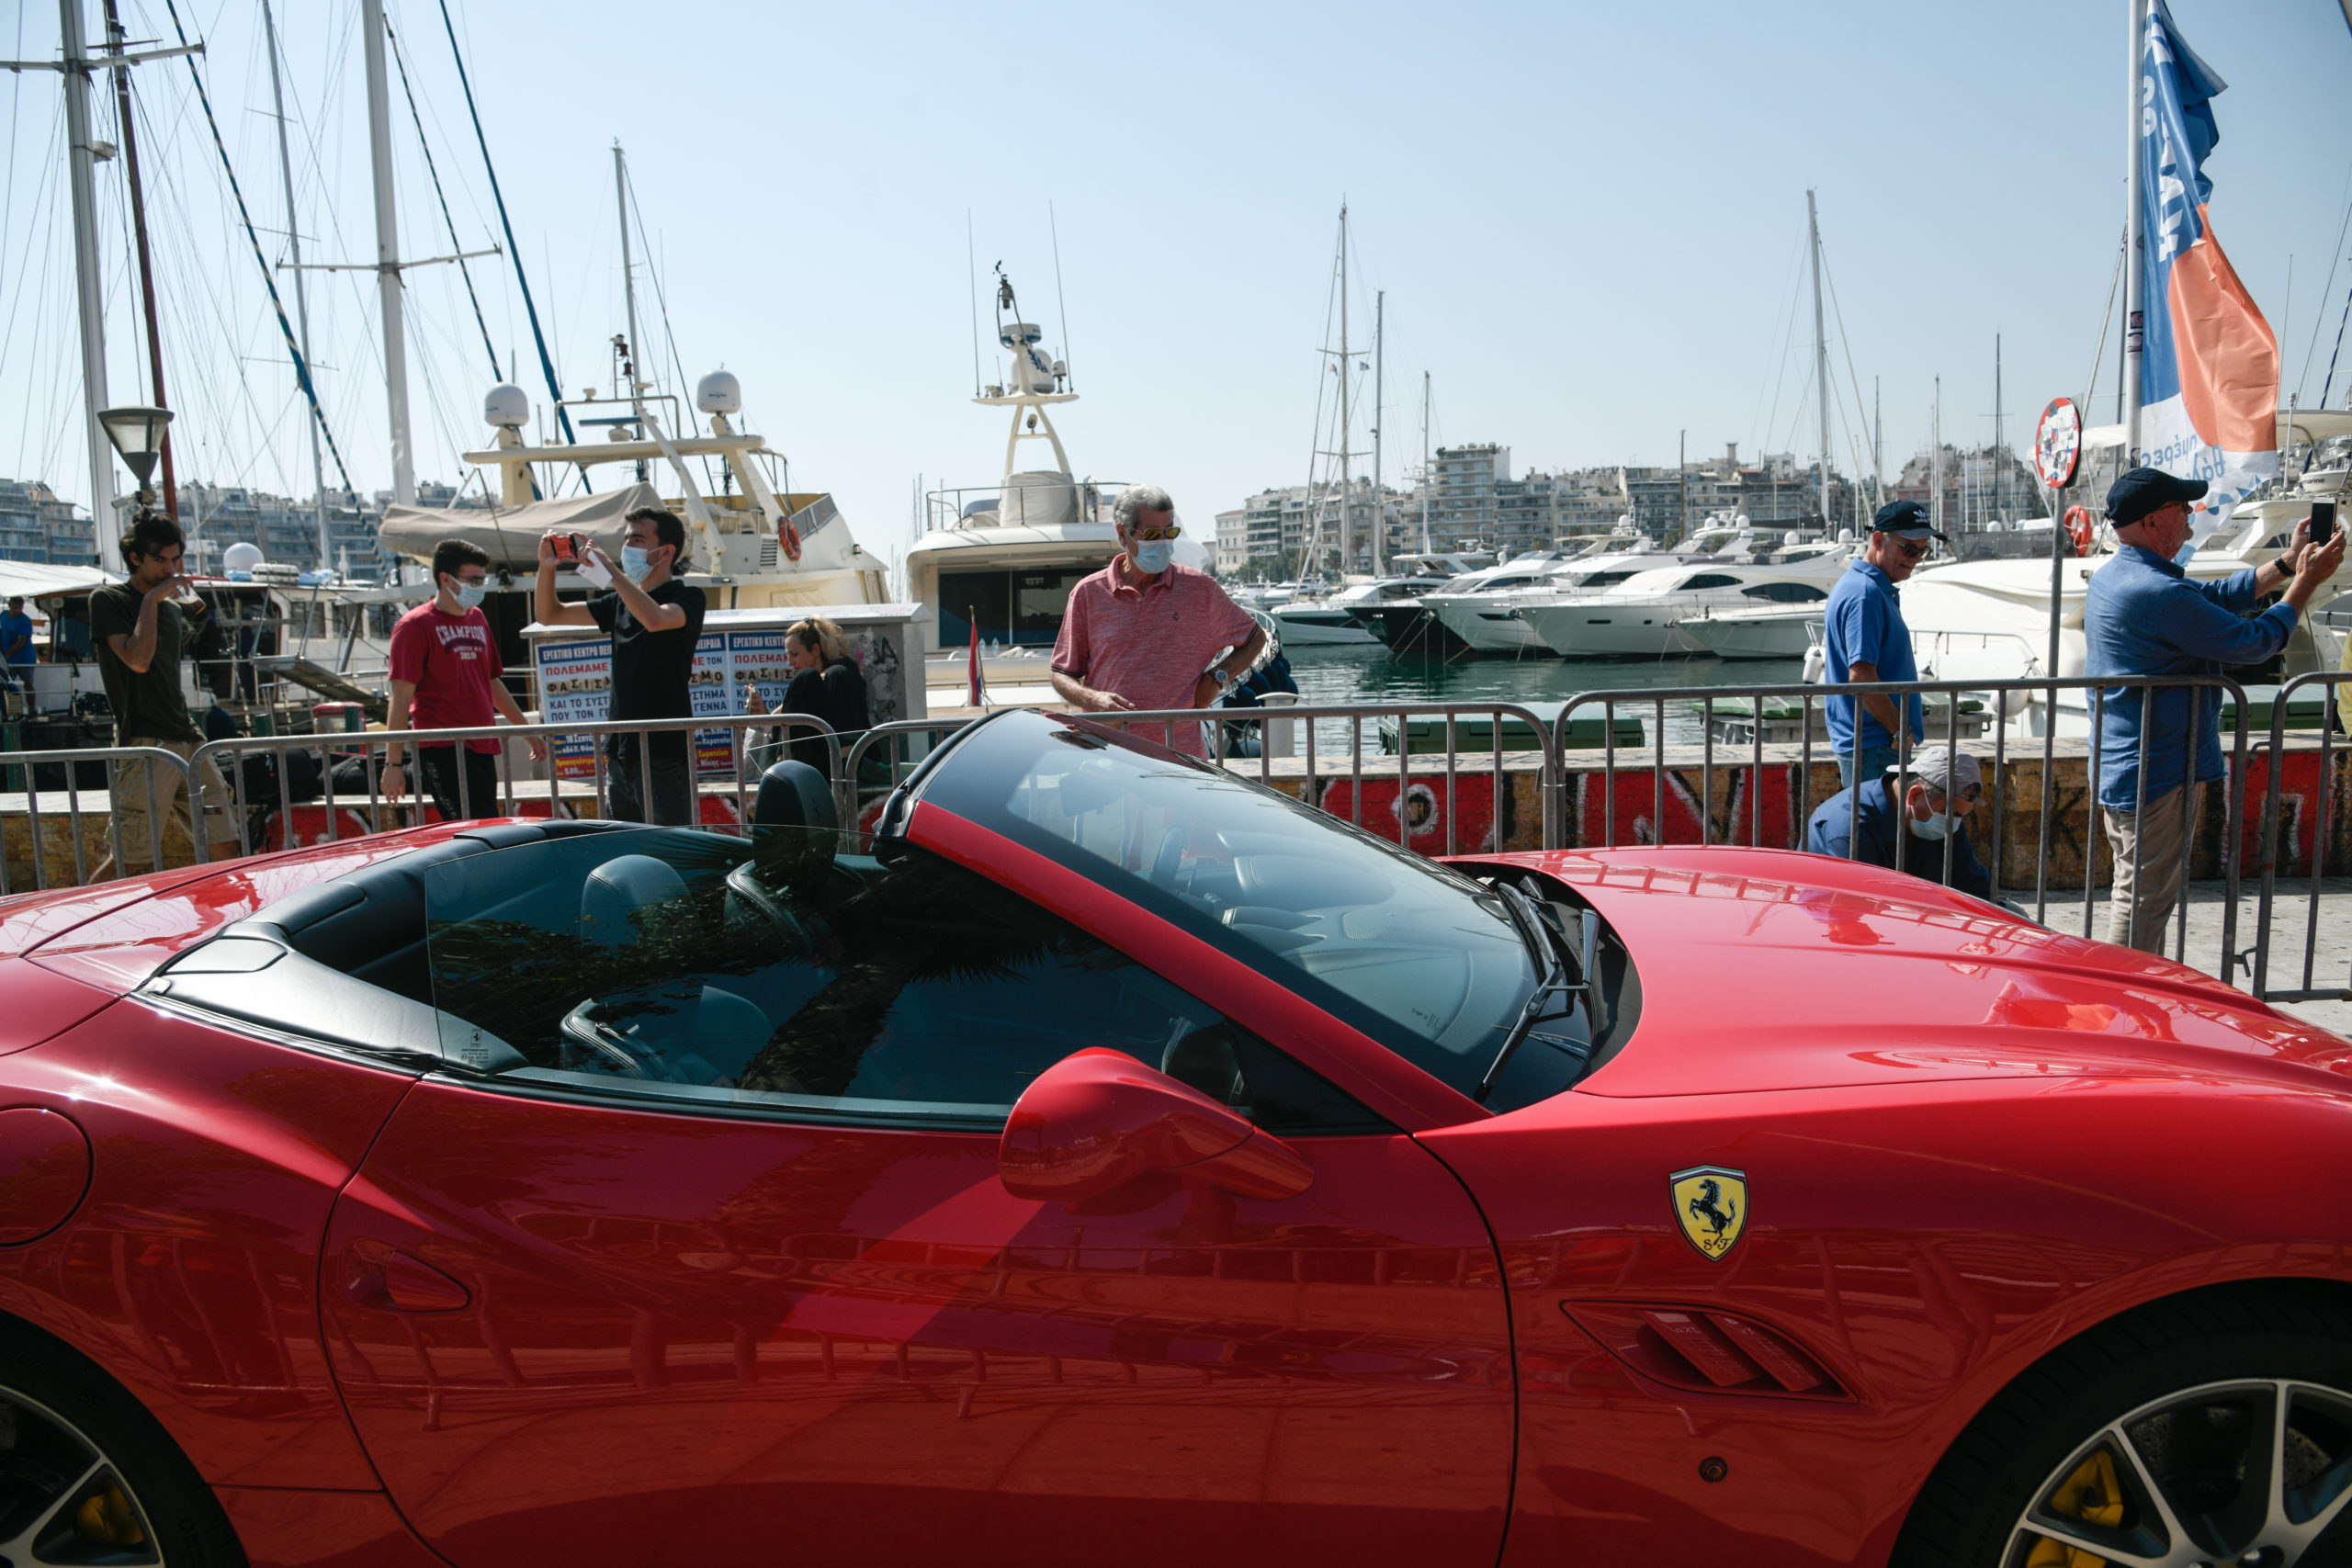 Ferrari: Στα κόκκινα «ντύθηκε» ο Πειραιάς – 30 κομψοτεχνήματα της ιταλικής φίρμας στο Πασαλιμάνι (εικόνες & video)